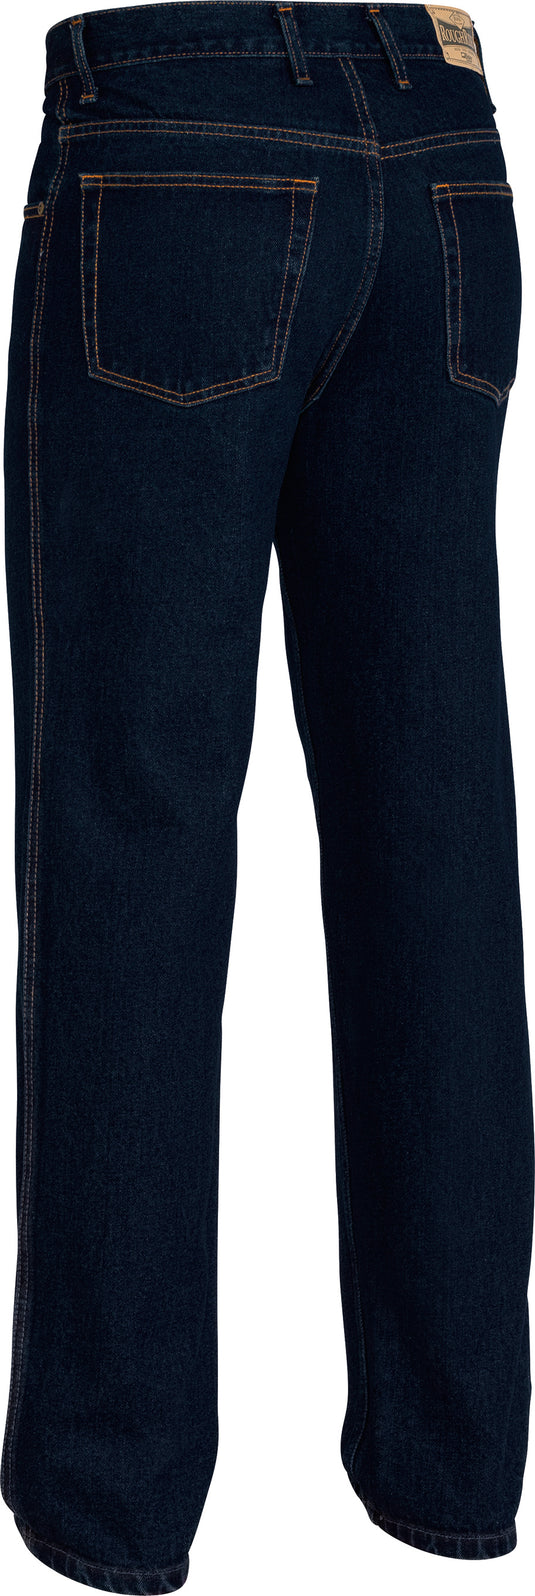 Wholesale BP6050 Bisley Rough Rider Denim Jeans - Regular Printed or Blank